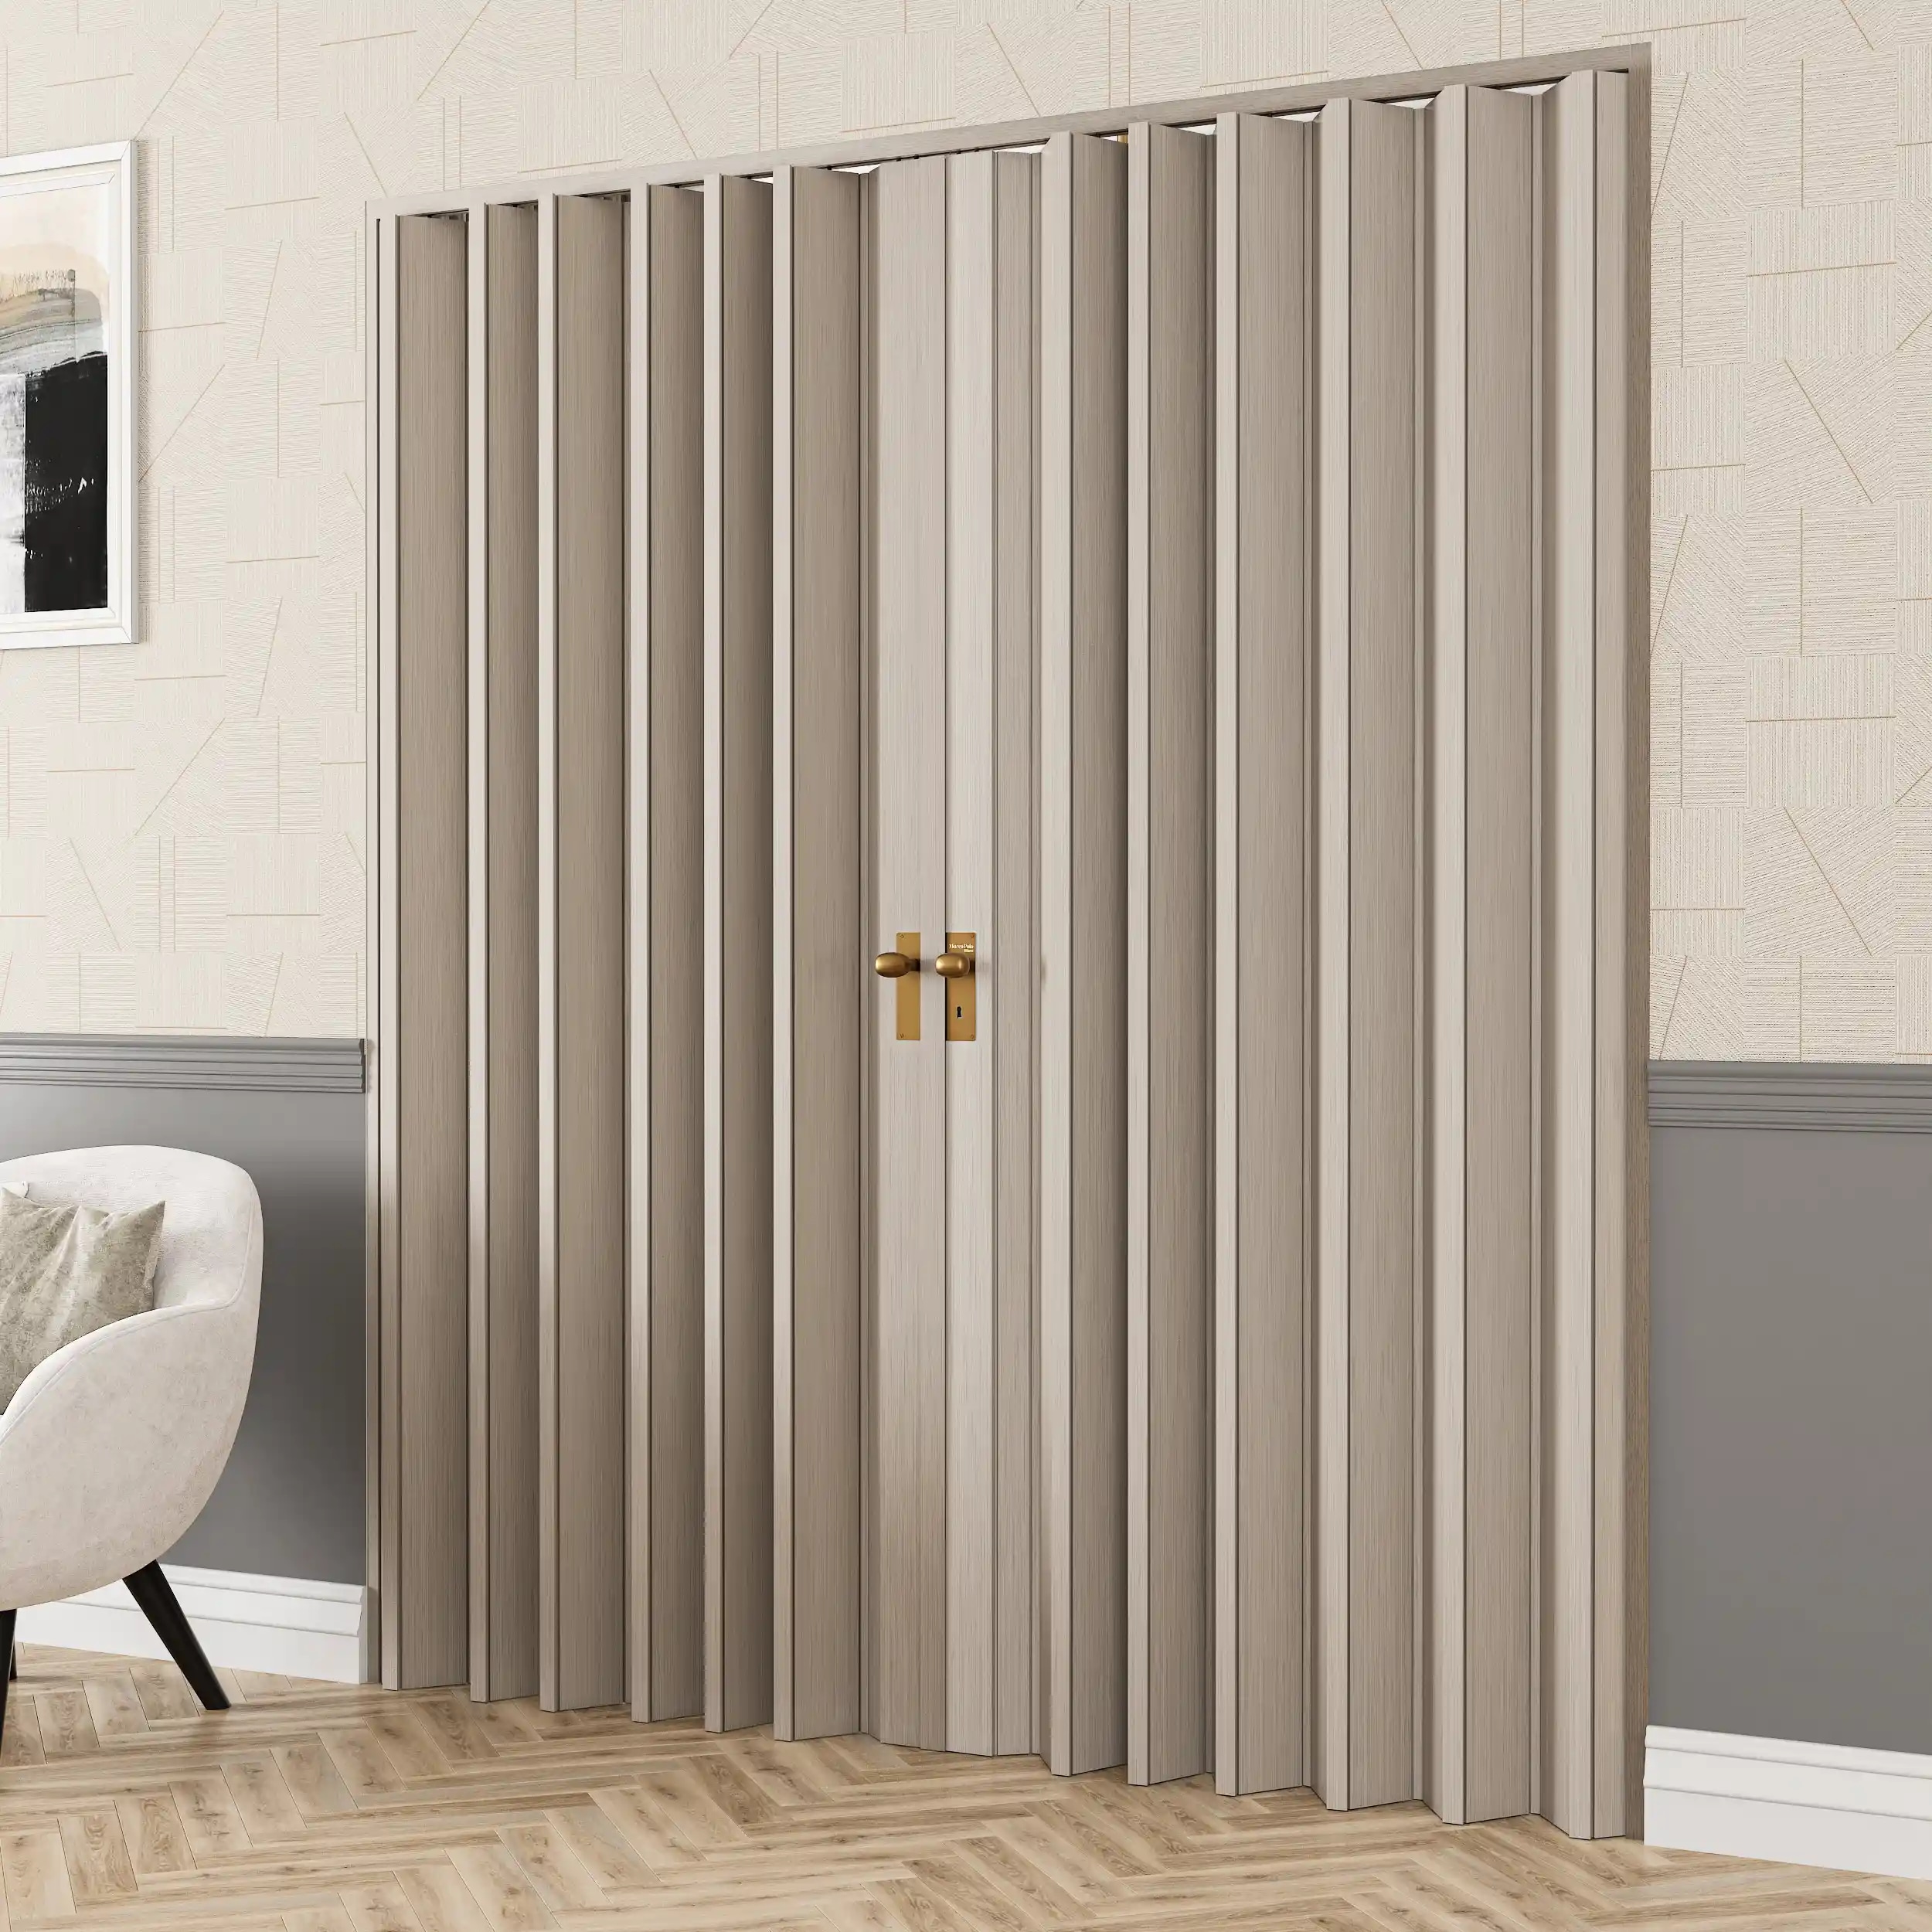 Wood-look Folding Doors